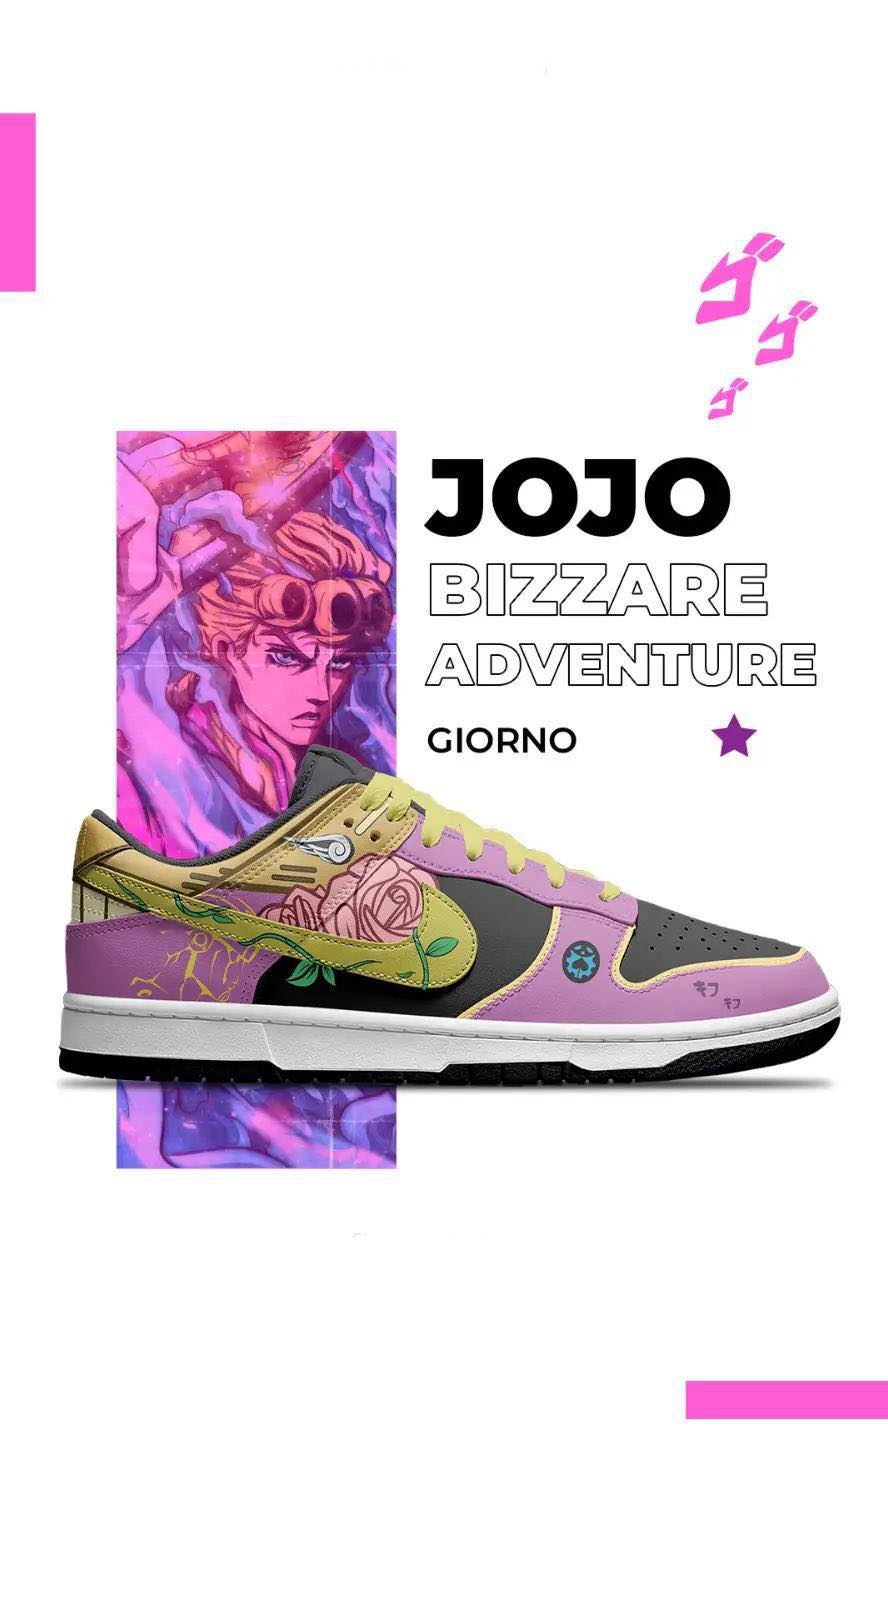 JoJo's Bizarre Adventure x Nike Shoes